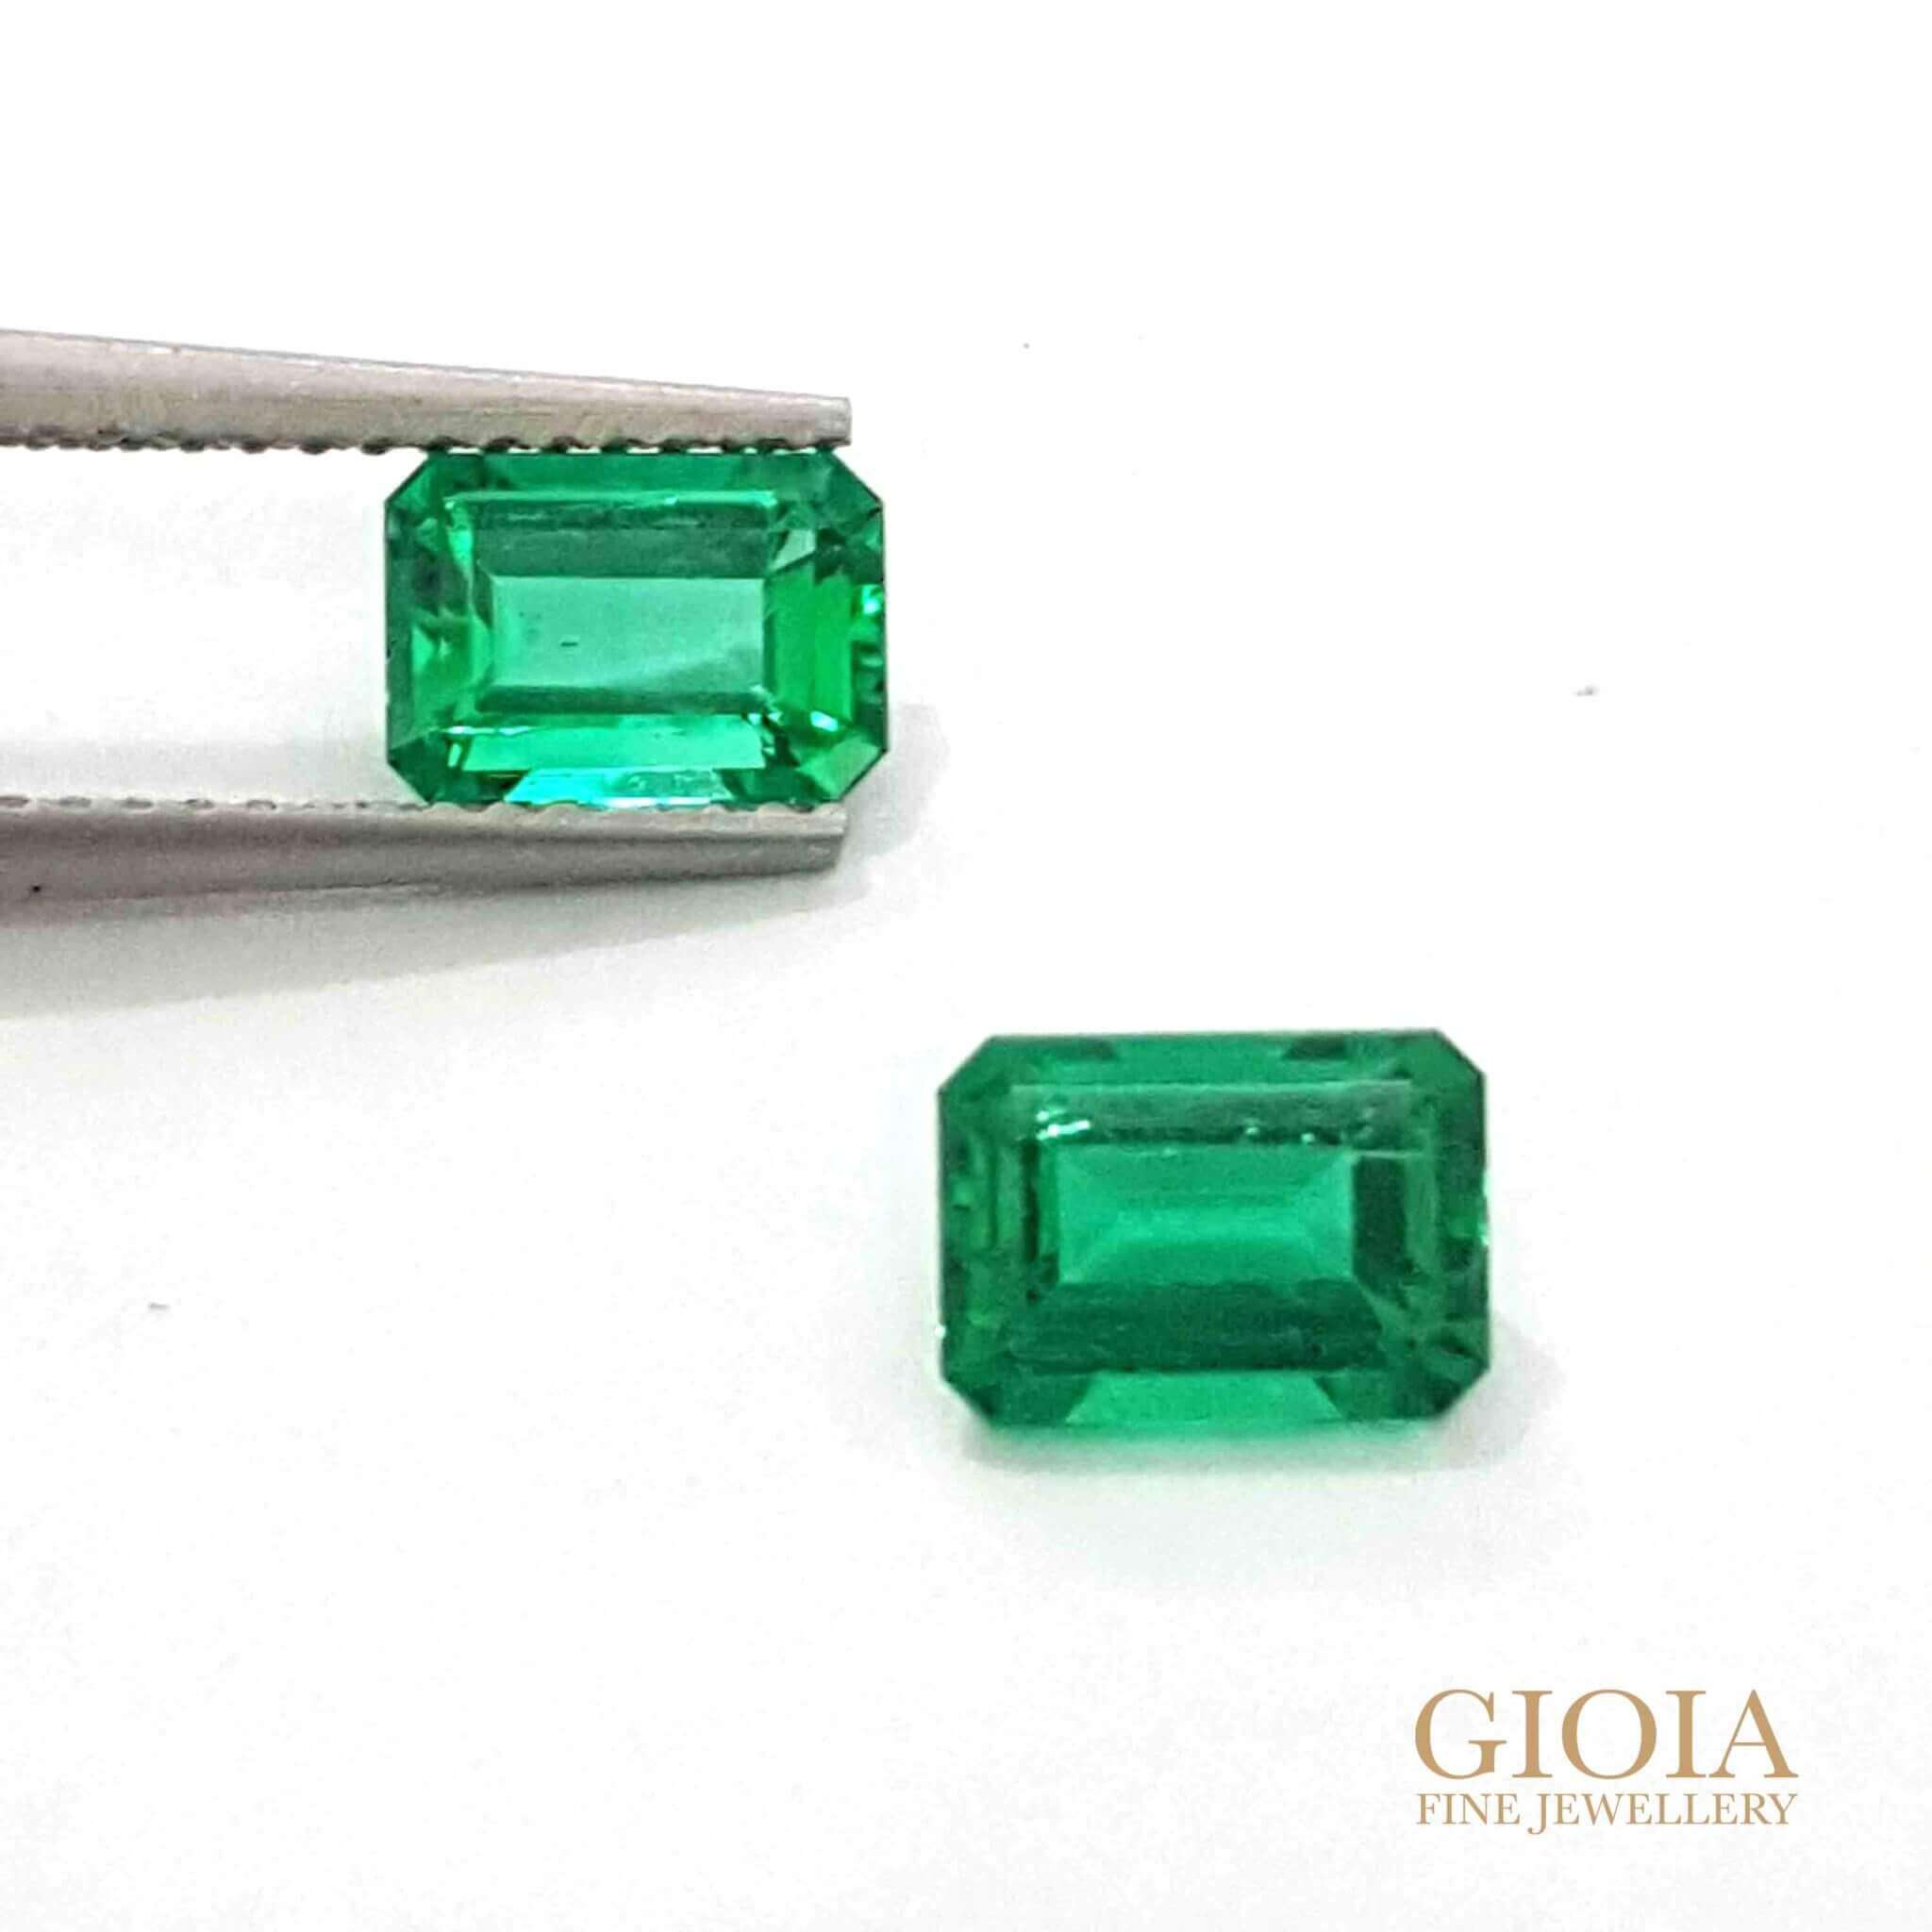 customised emerald gemstone pair earring for GIOIA Fine Jewellery